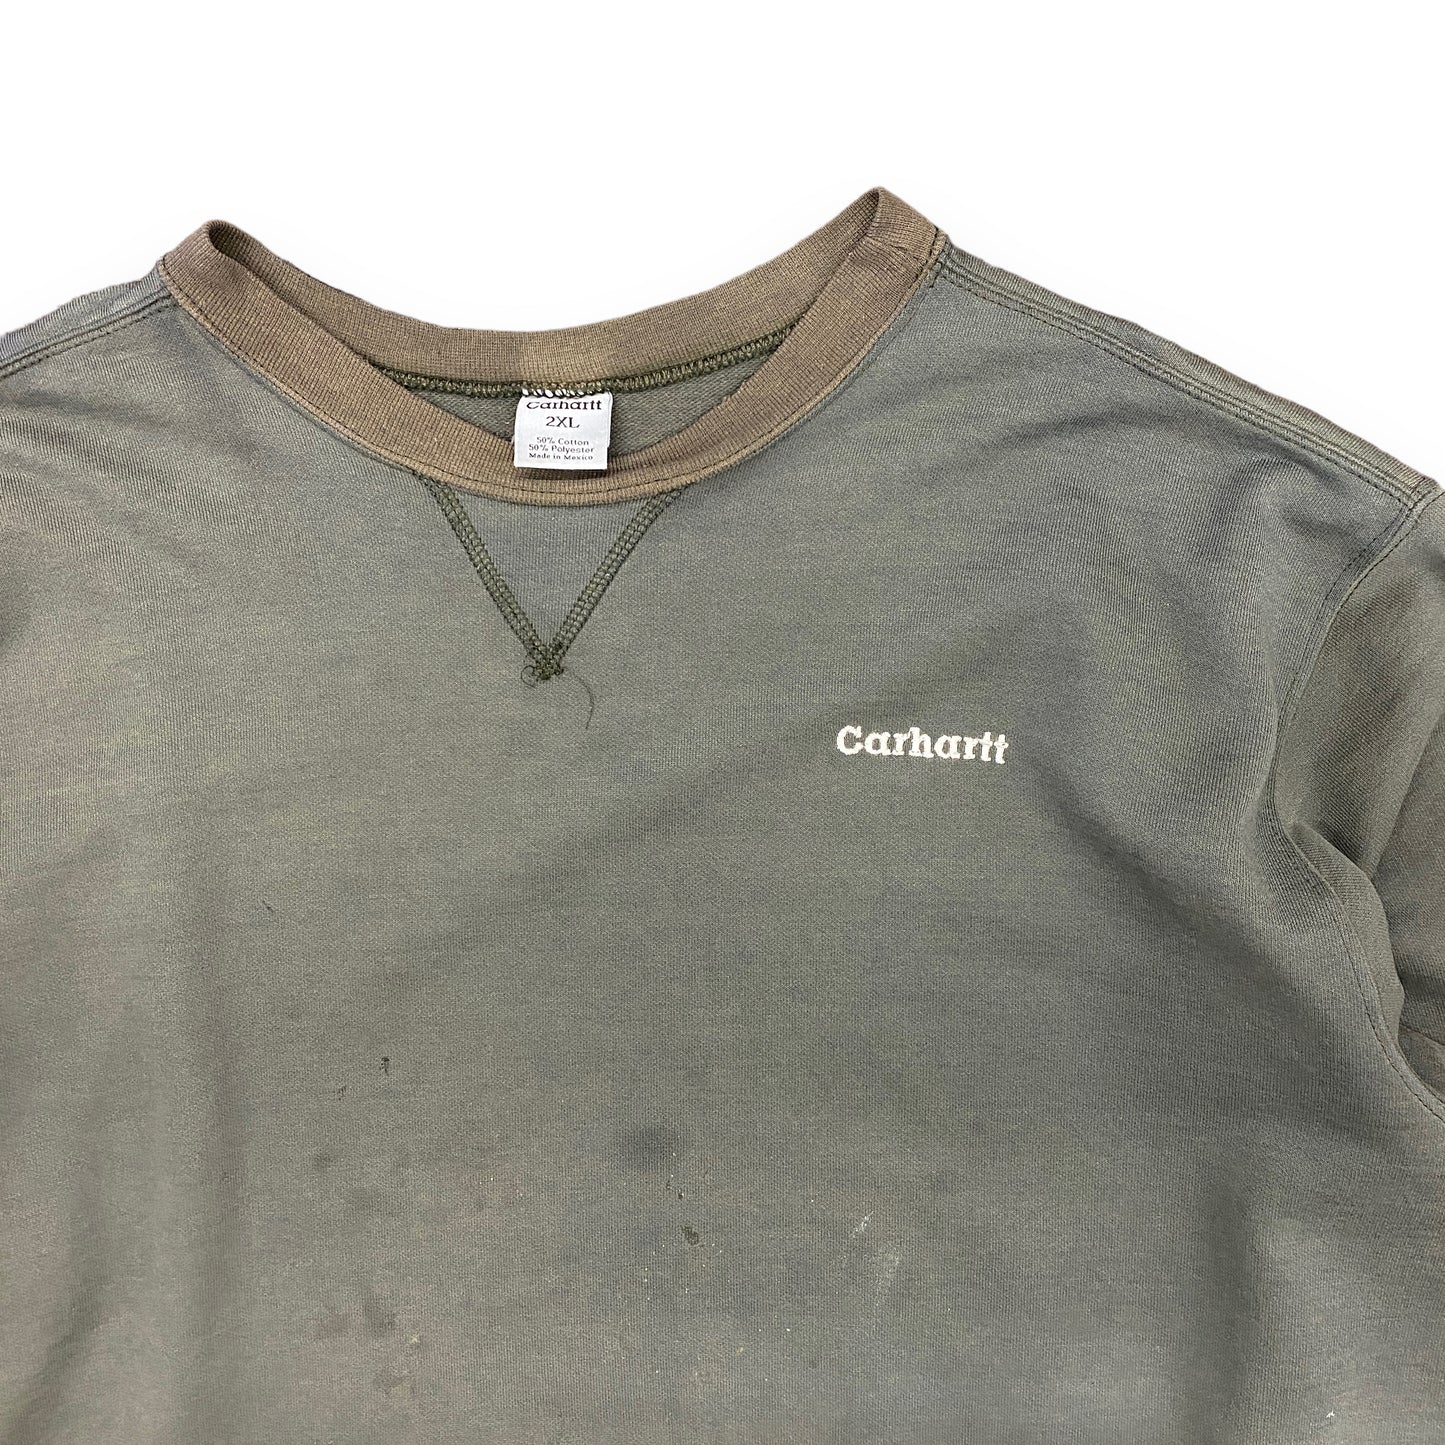 Vintage Oversized Thrashed Carhartt Crewneck Sweatshirt - Size XXL